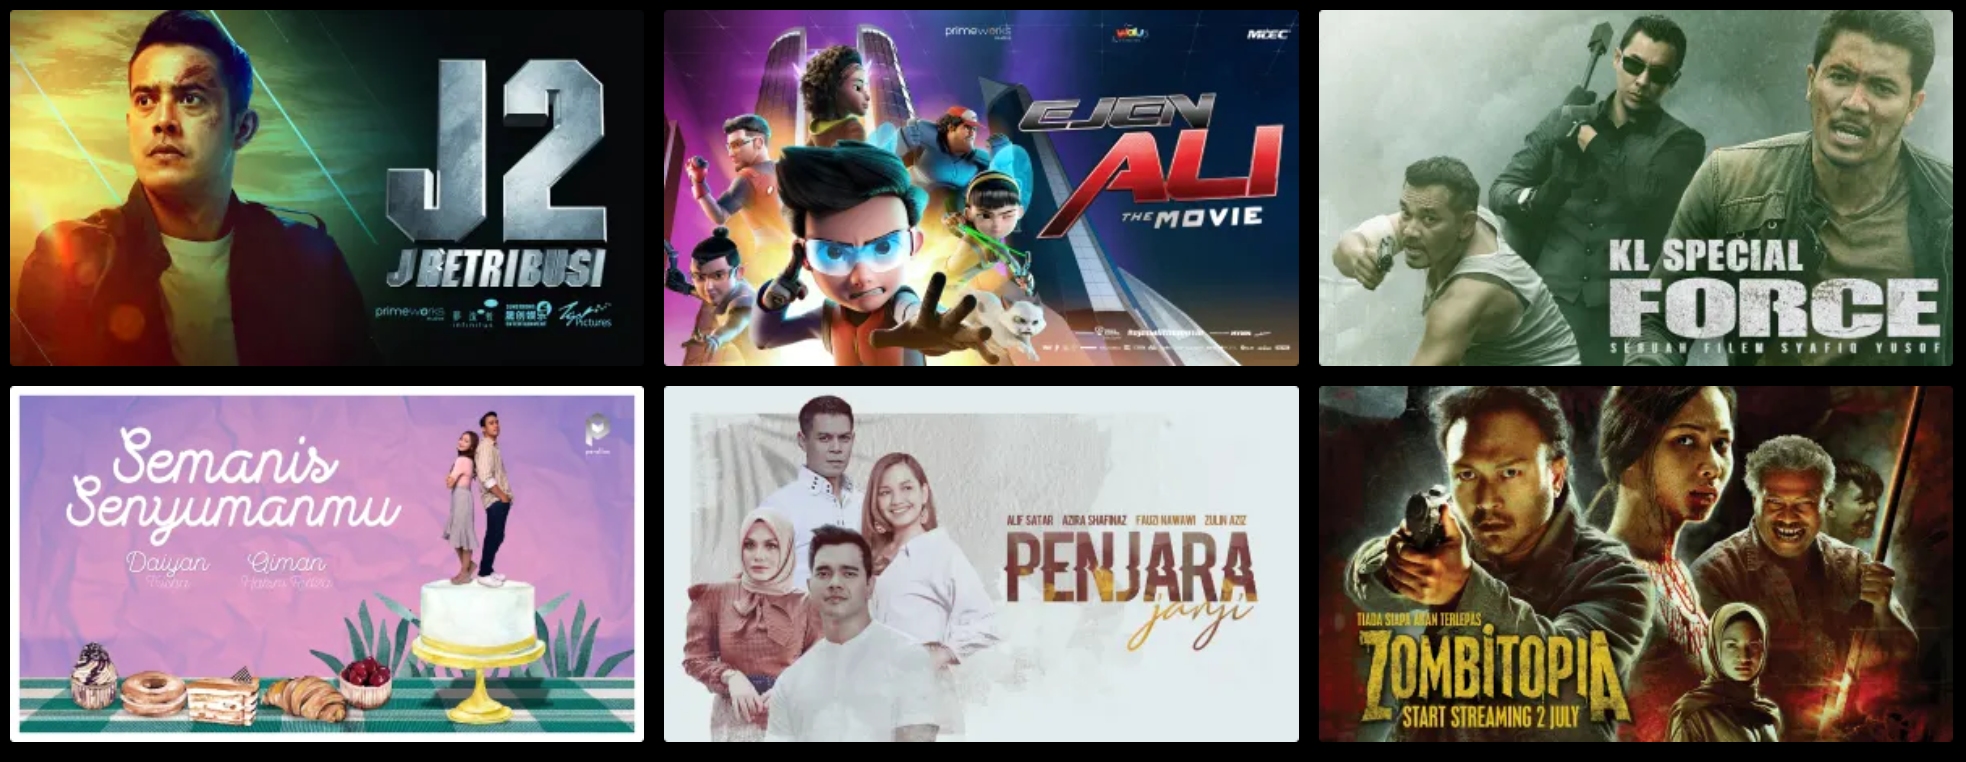 Disney Plus Hotstar Malaysian content